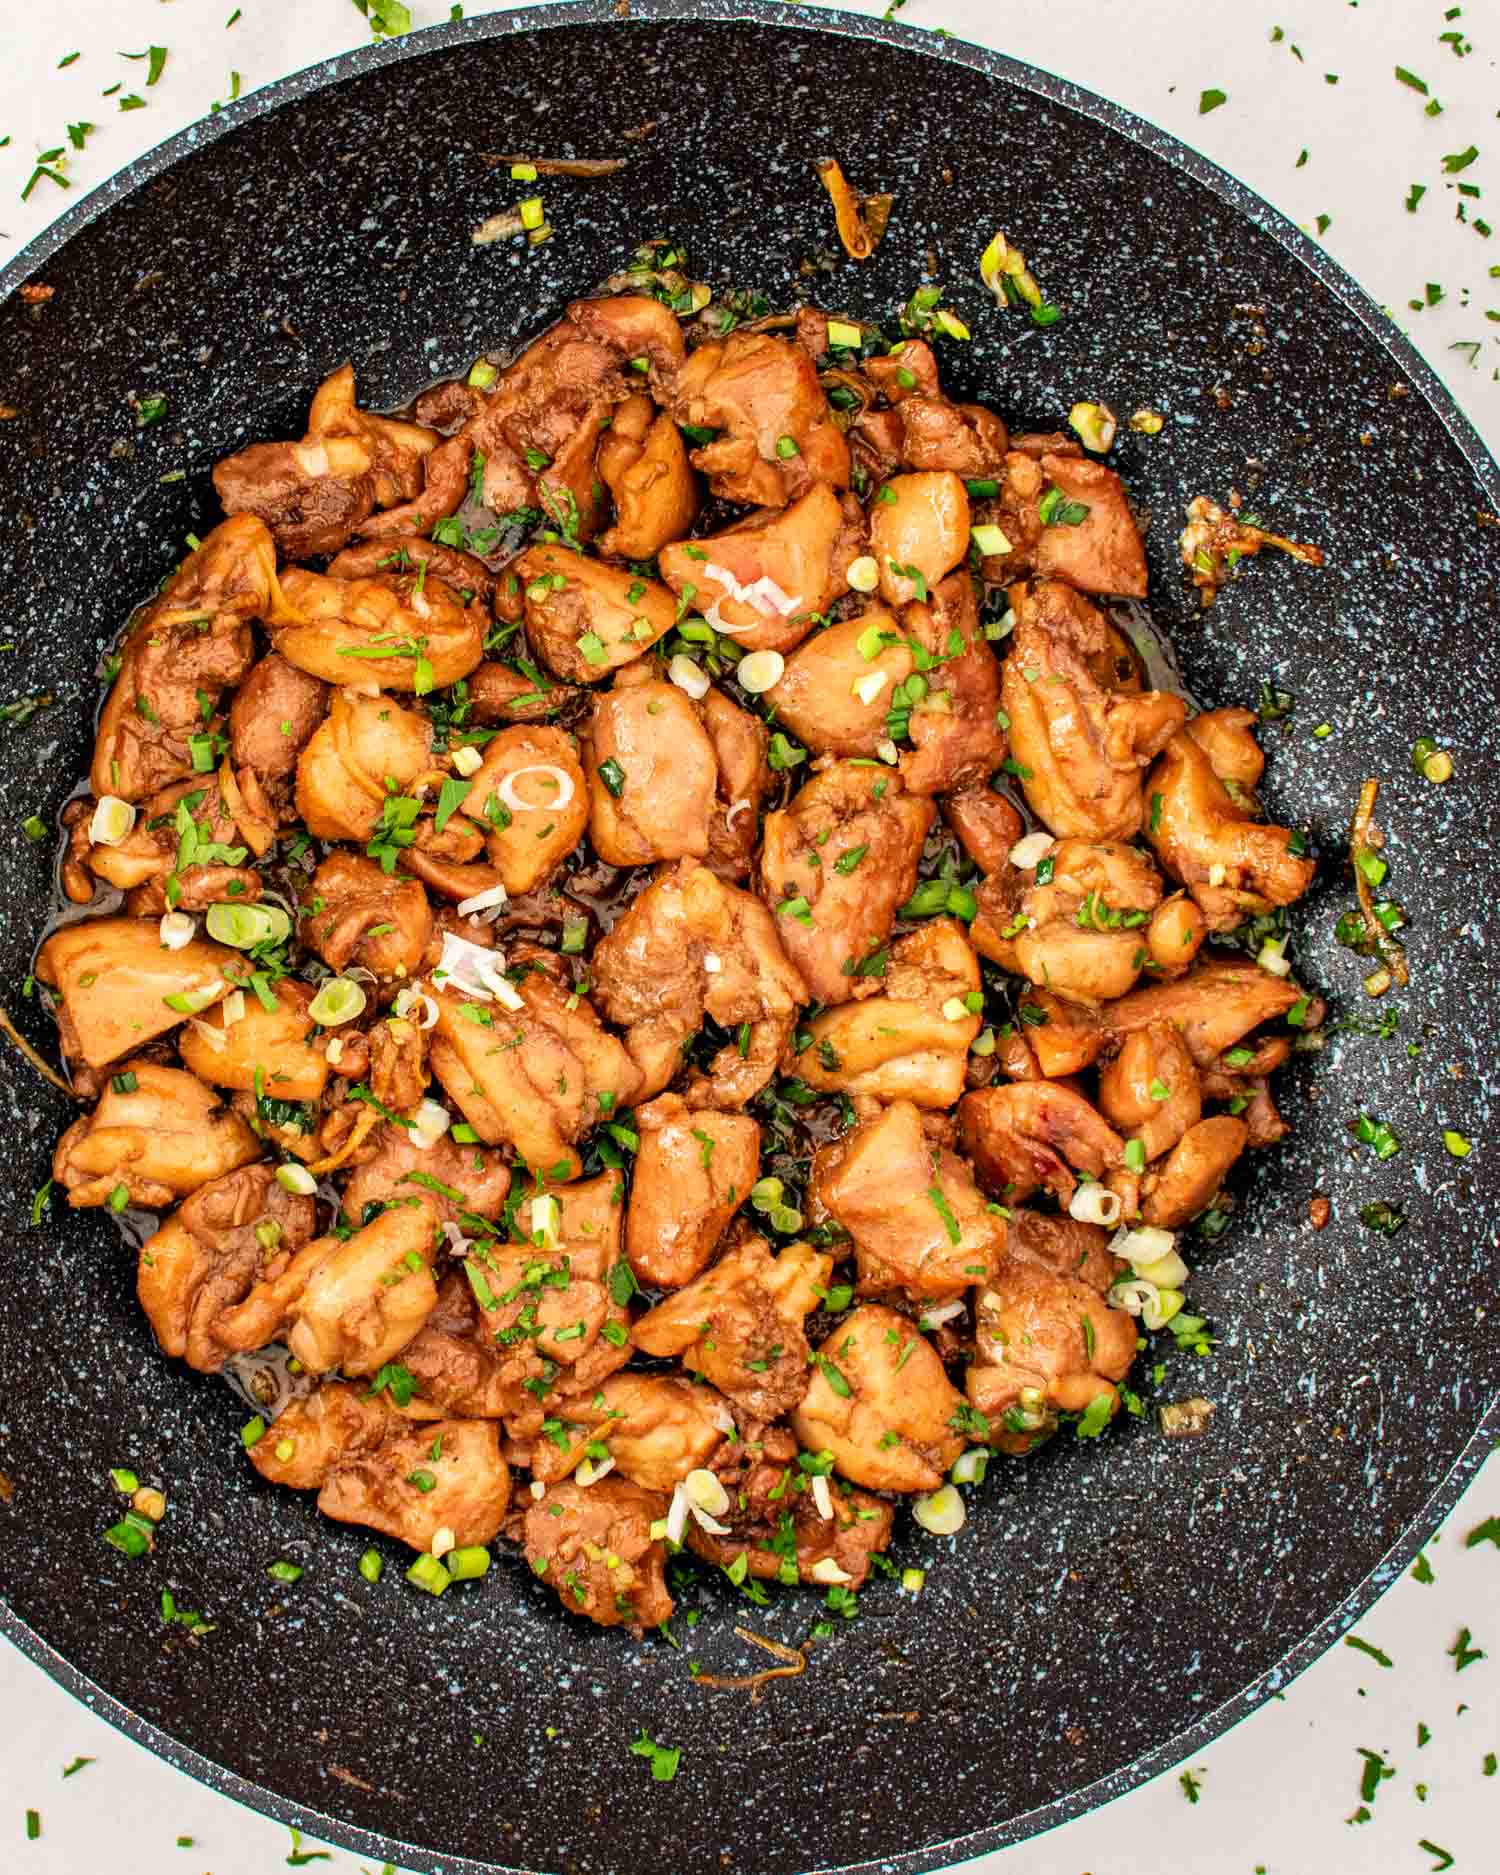 freshly made Vietnamese ginger chicken in a wok.